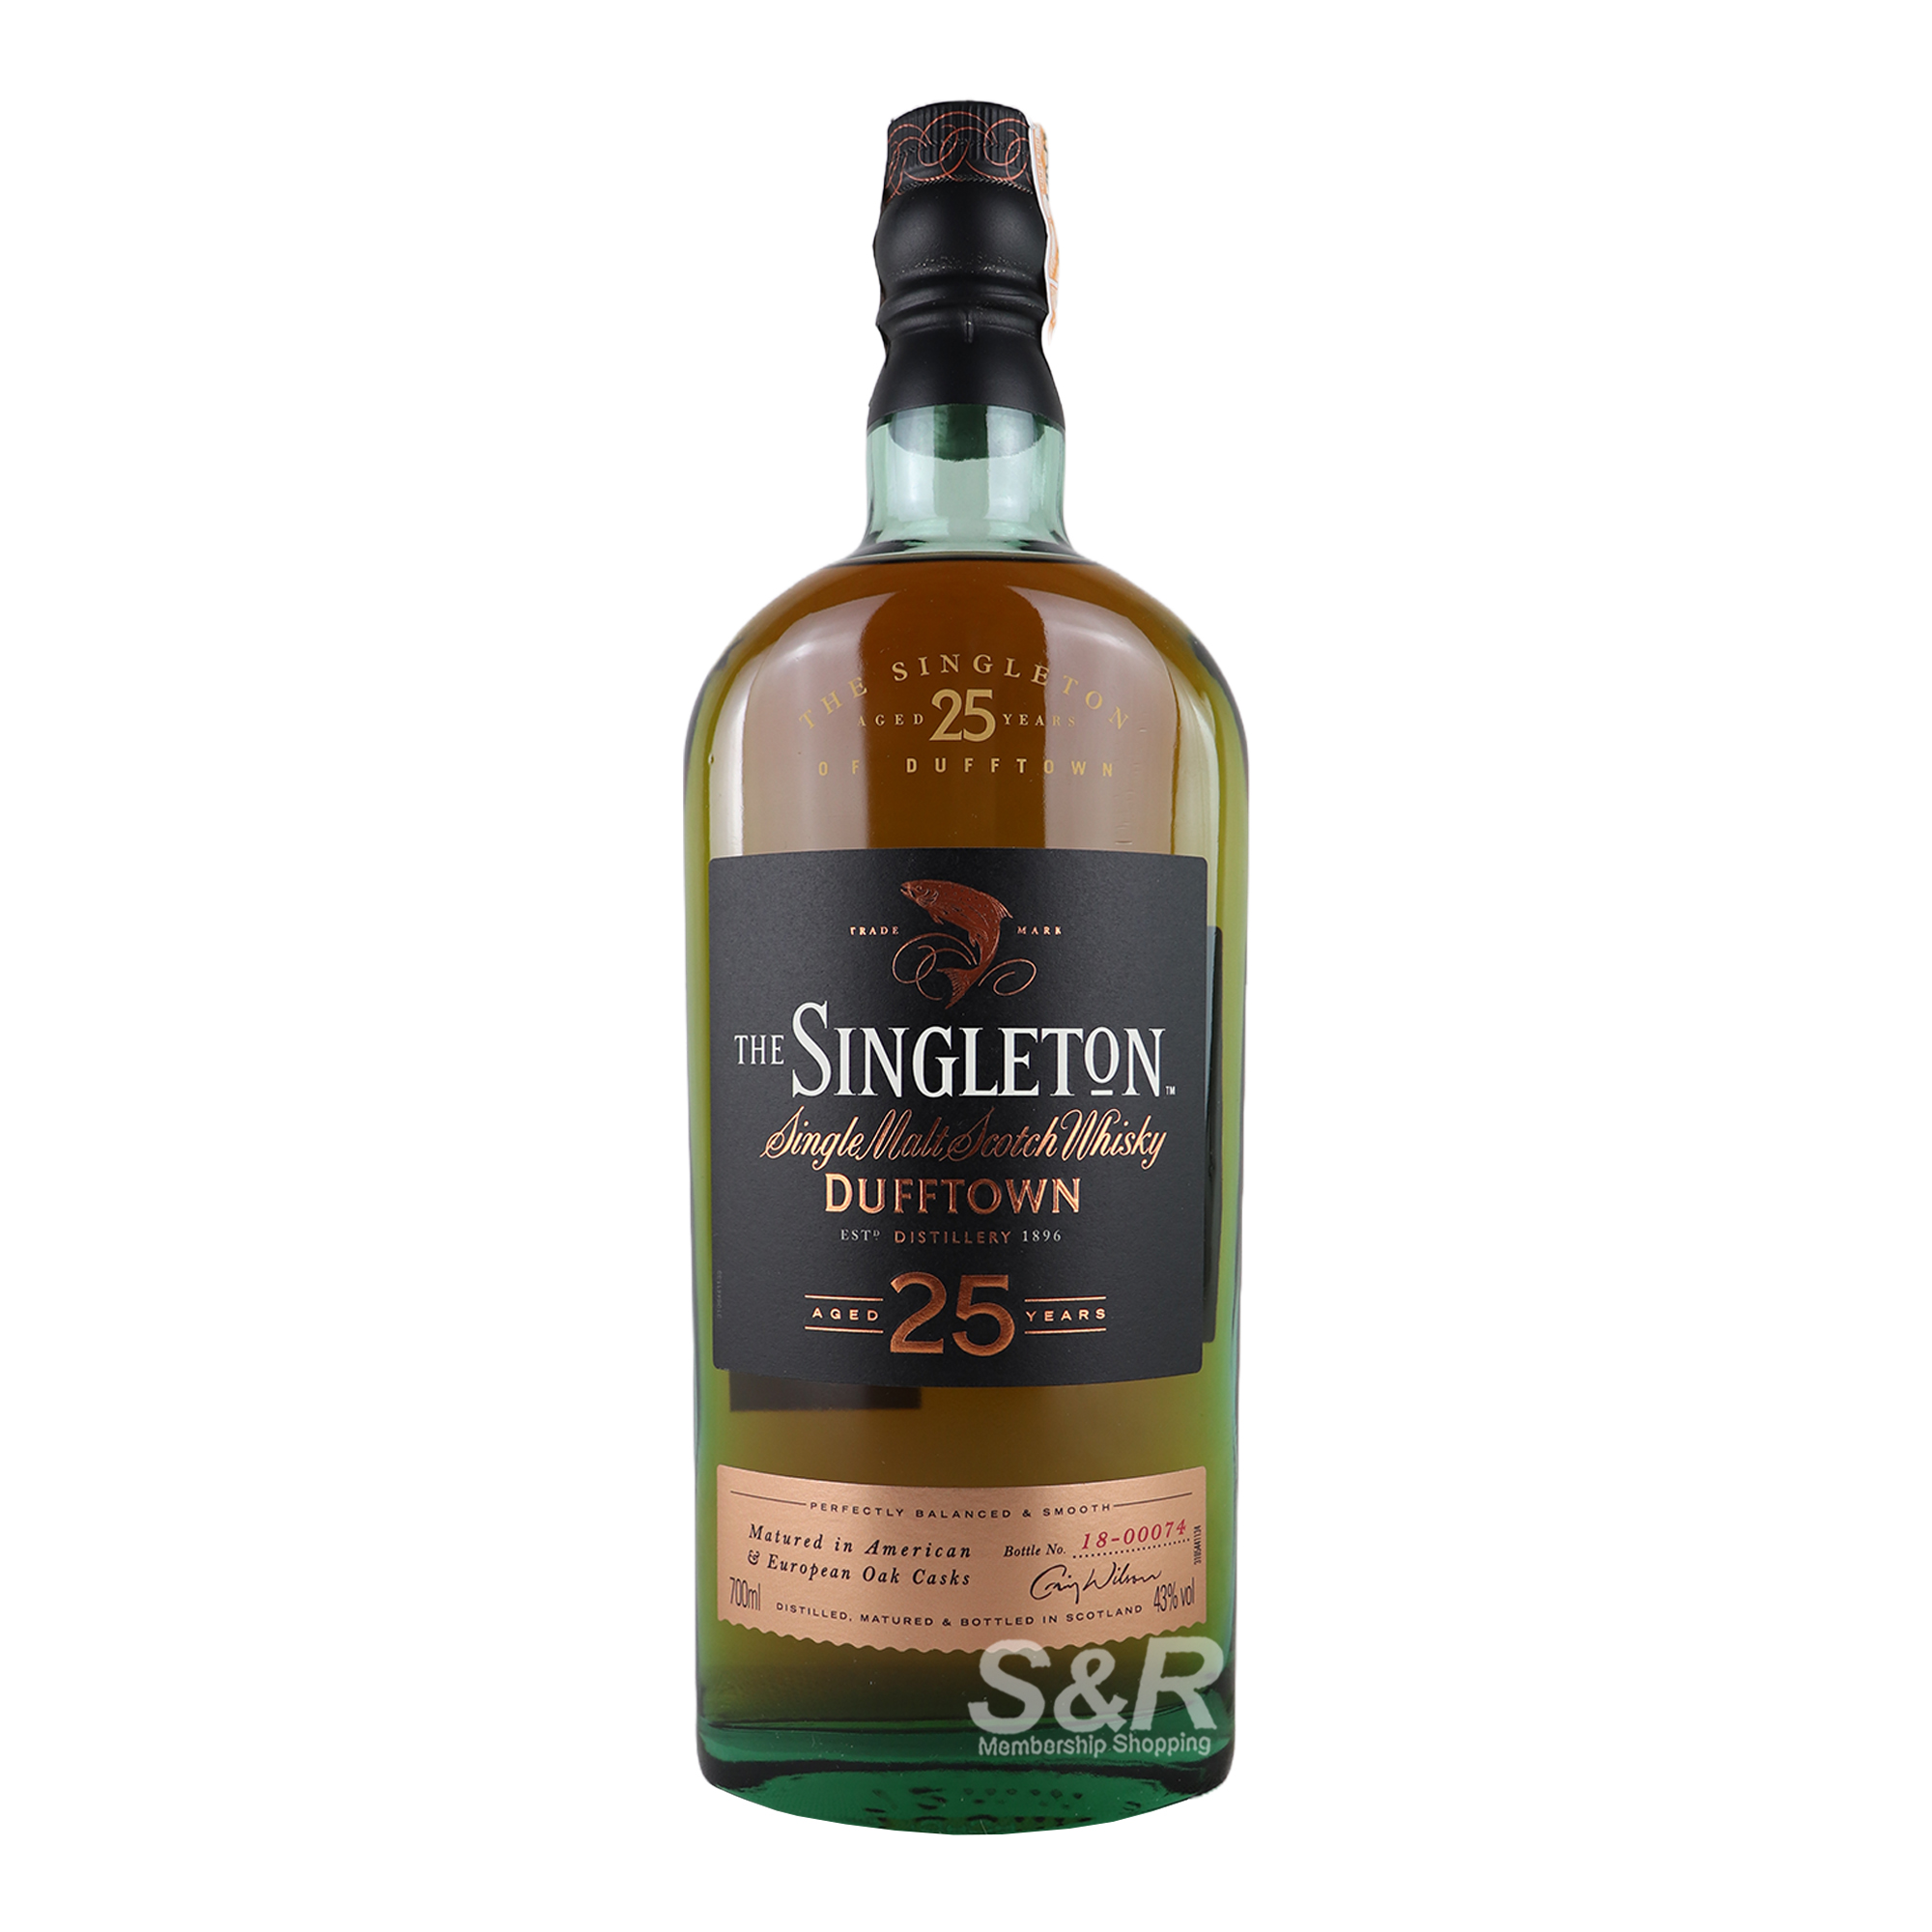 The Singleton Single Malt Scotch Whisky Dufftown 25 Years Old 700mL